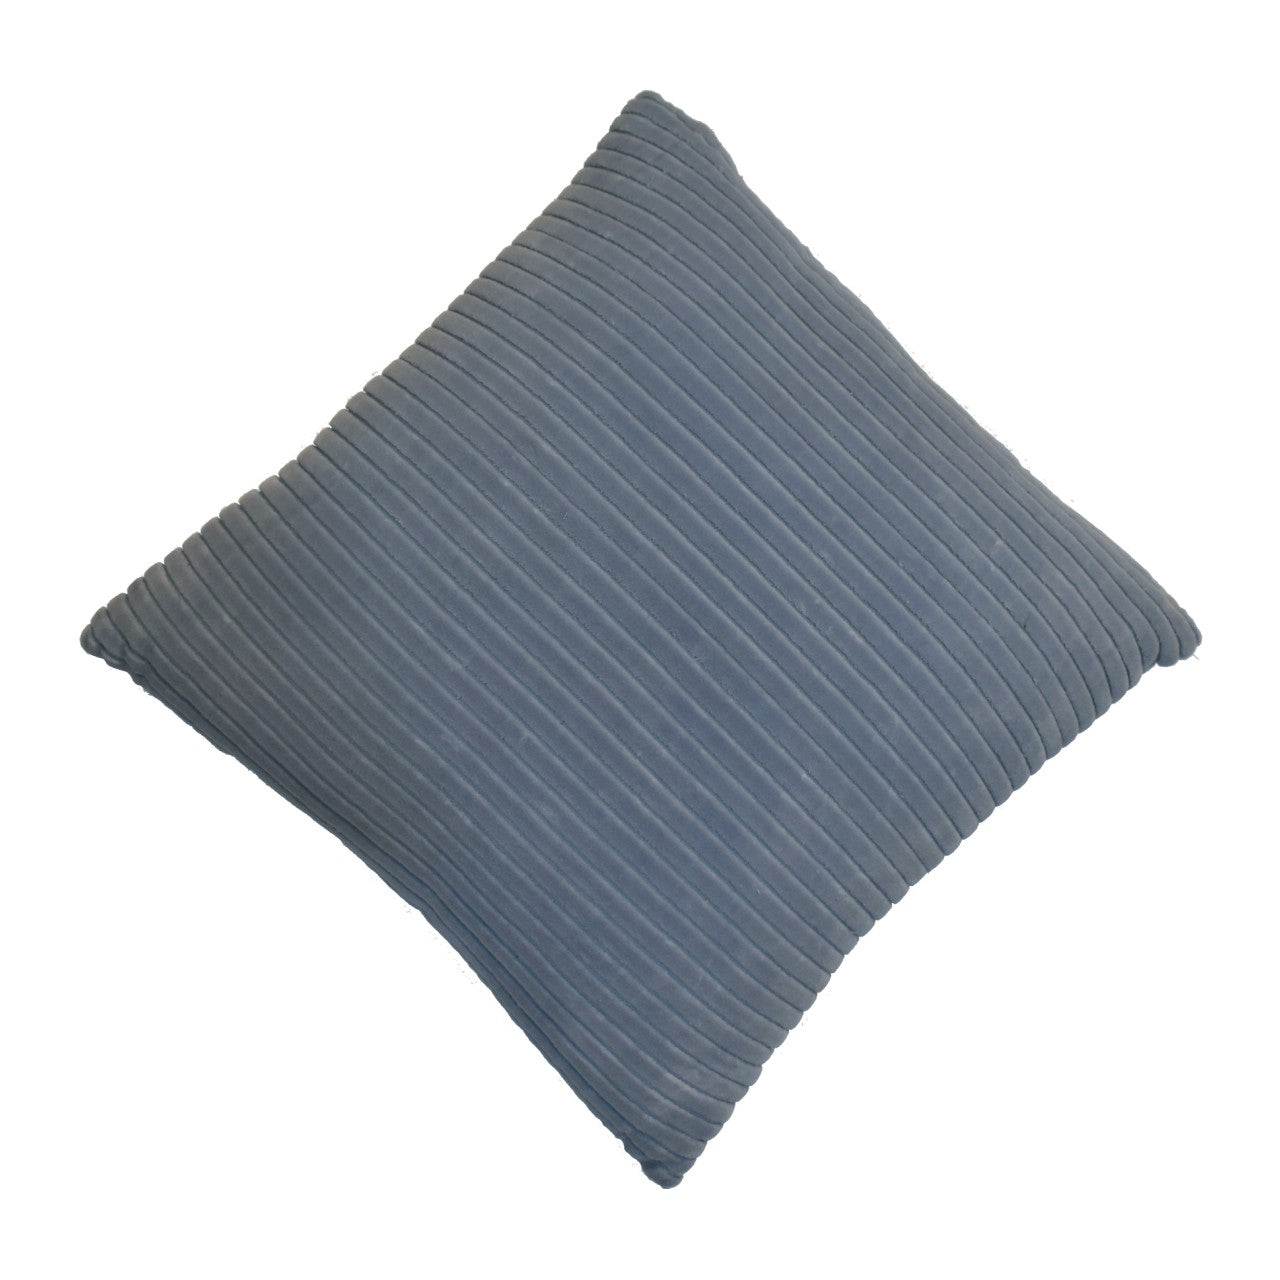 Ribbed Grey Cushion Set of 2 - CasaFenix